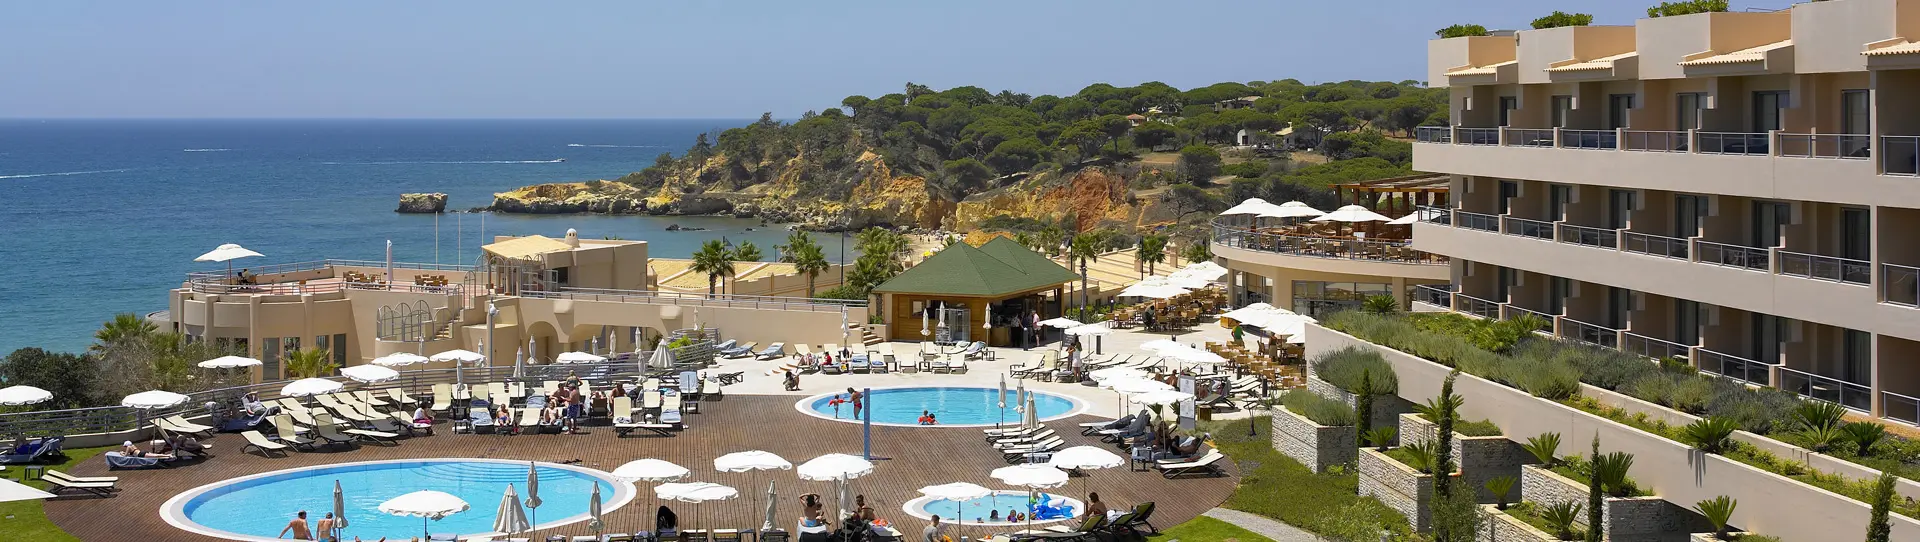 Portugal golf holidays - Grande Real Santa Eulália Resort & Hotel Spa - Photo 1